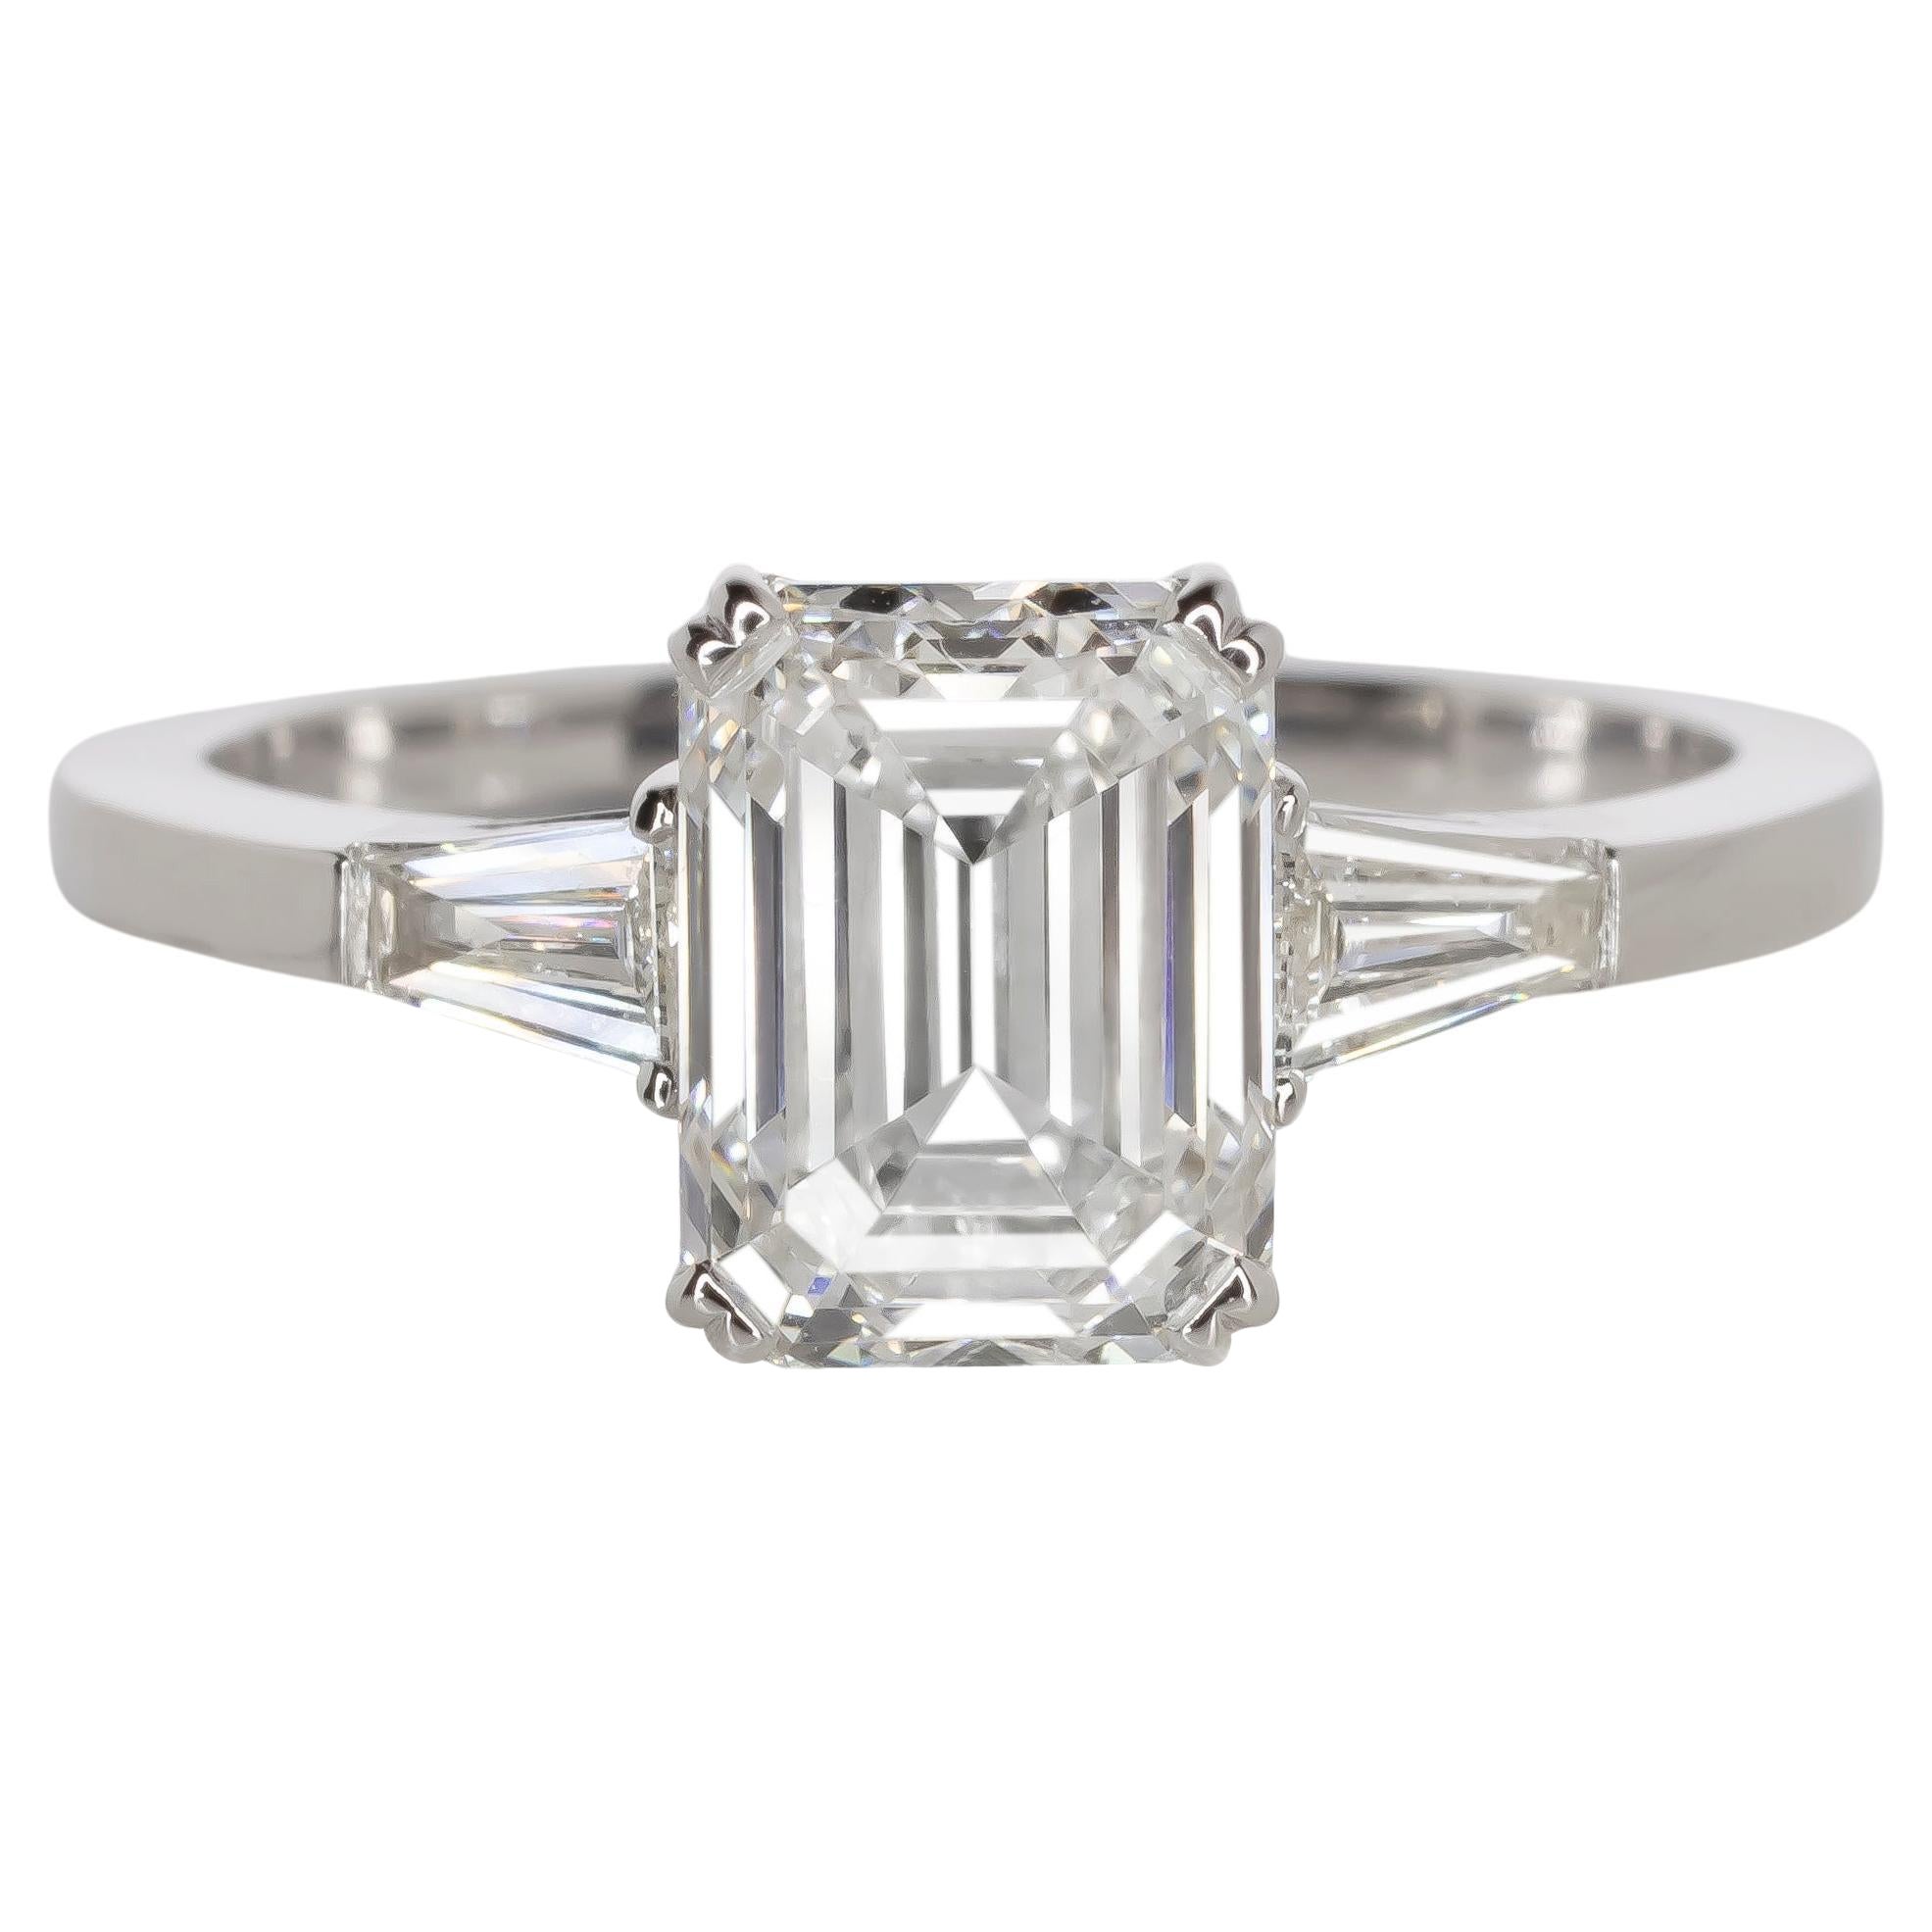 GIA Certified 2.01 Carat Emerald Cut Diamond 18K White Gold Ring